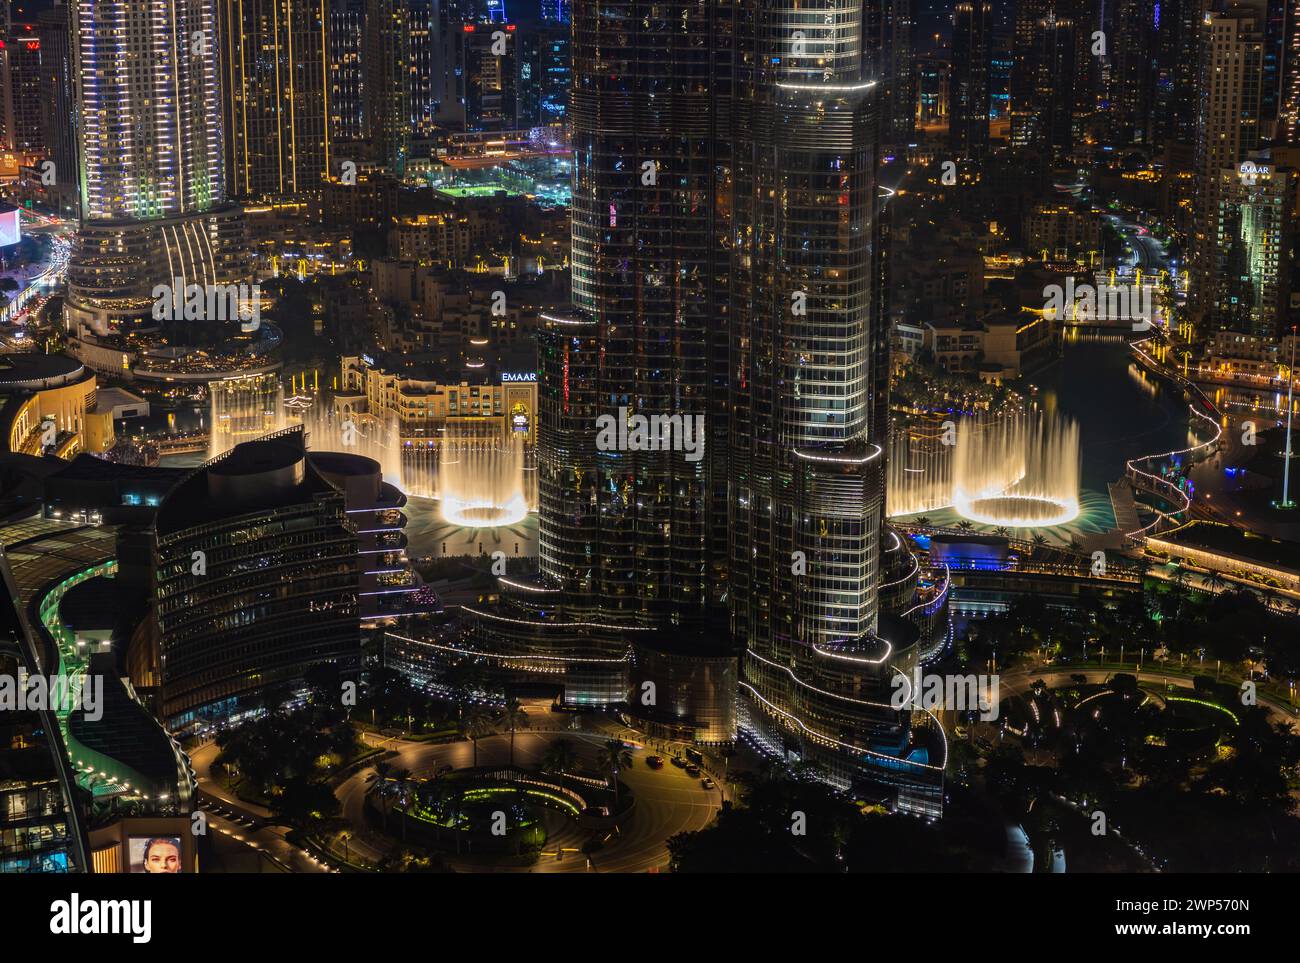 Una foto del Dubai Fountain Show, por la noche, y la parte inferior del Burj Khalifa, junto a otros edificios del centro de Dubai. Foto de stock